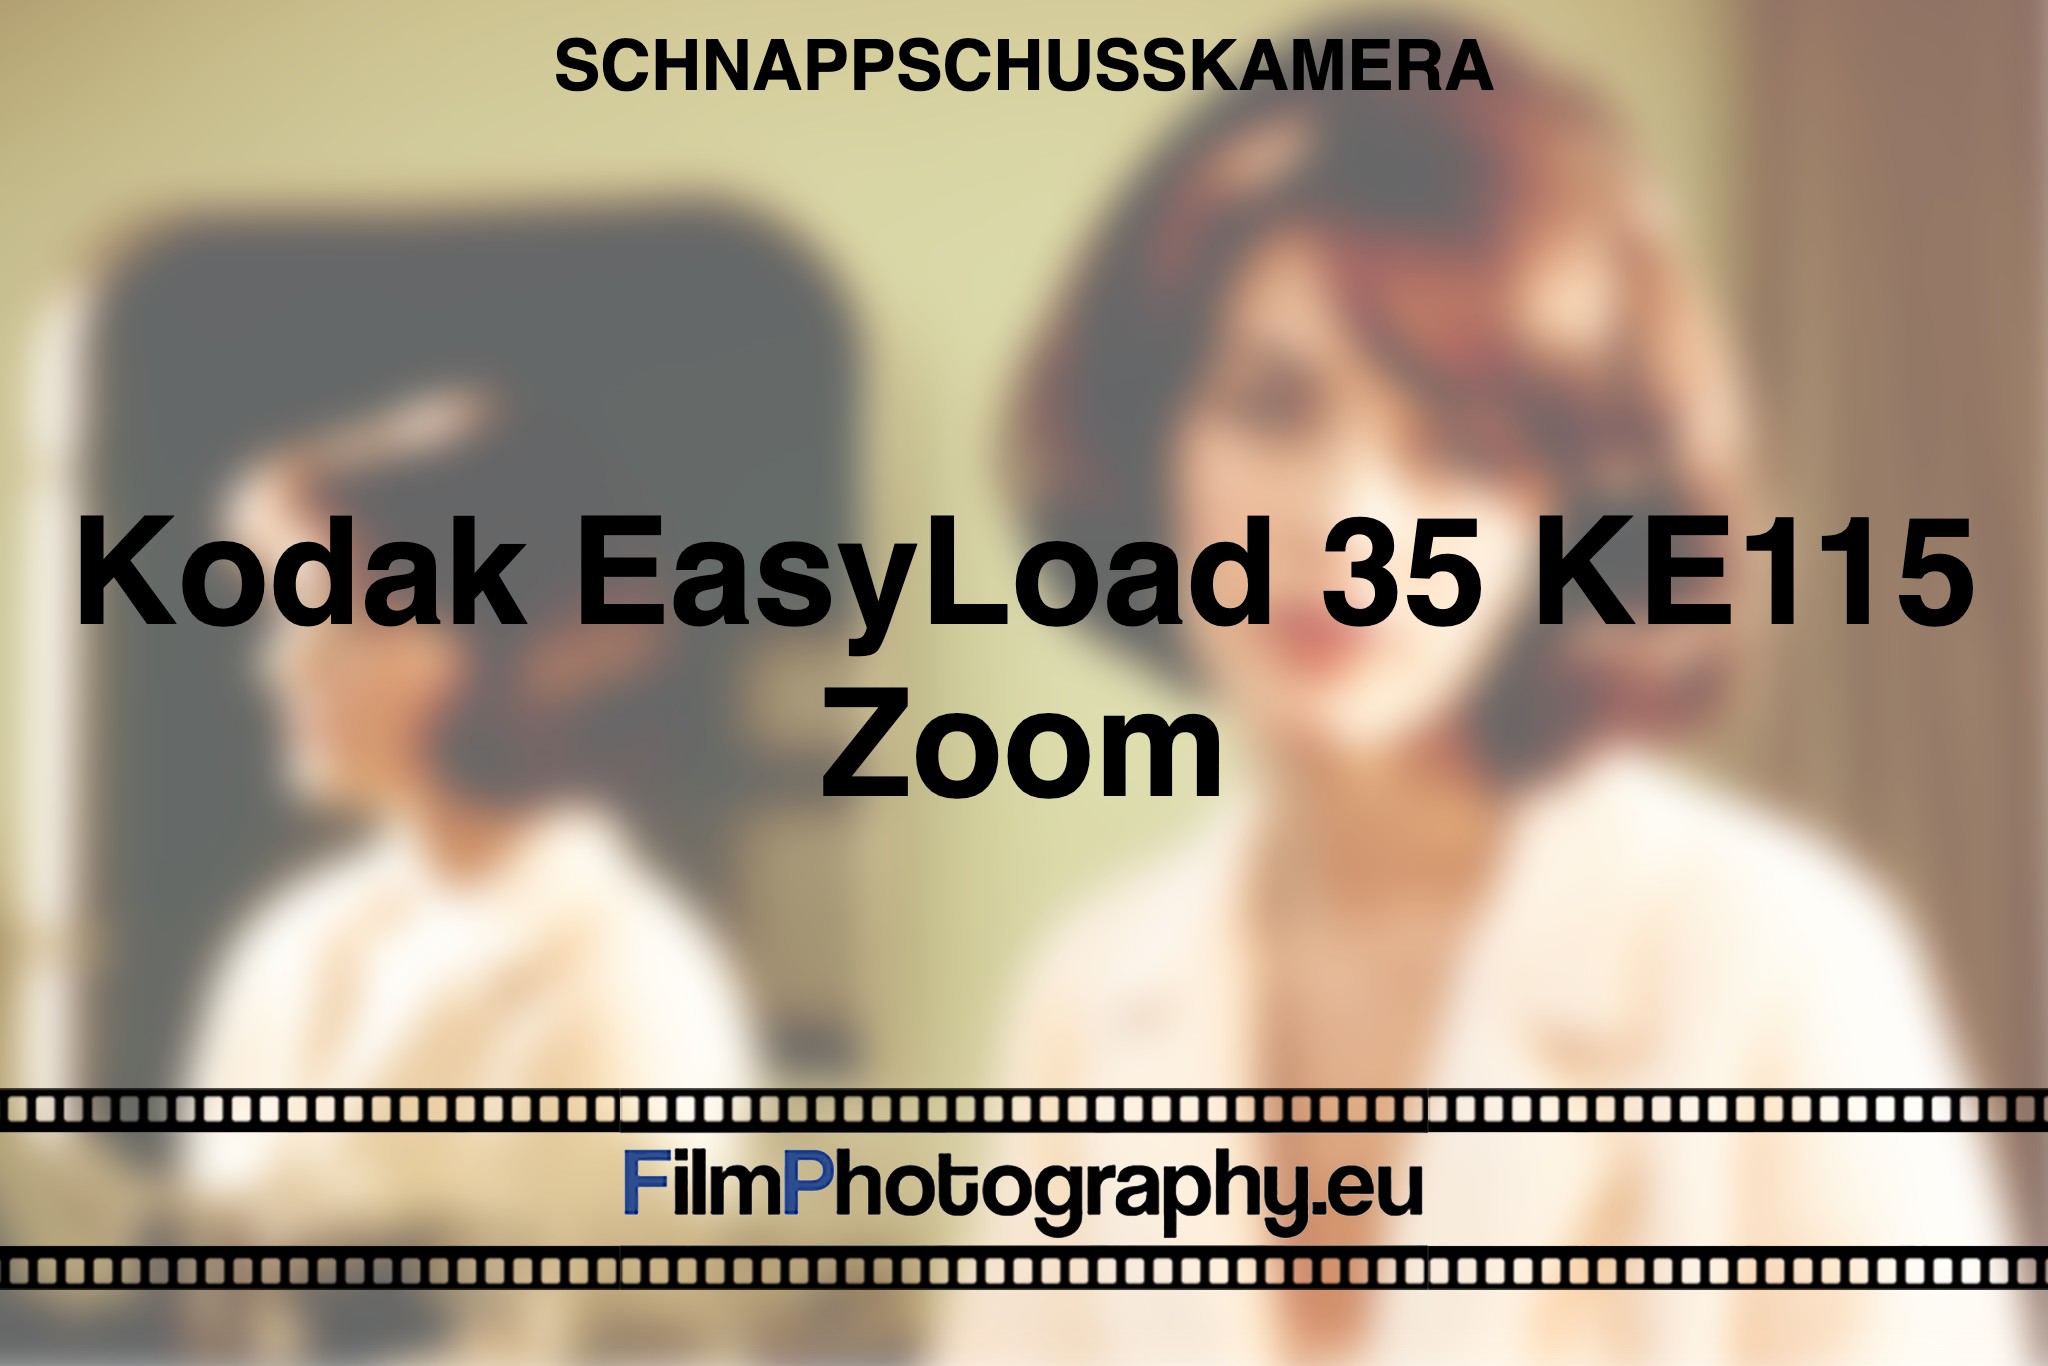 kodak-easyload-35-ke115-zoom-schnappschusskamera-bnv